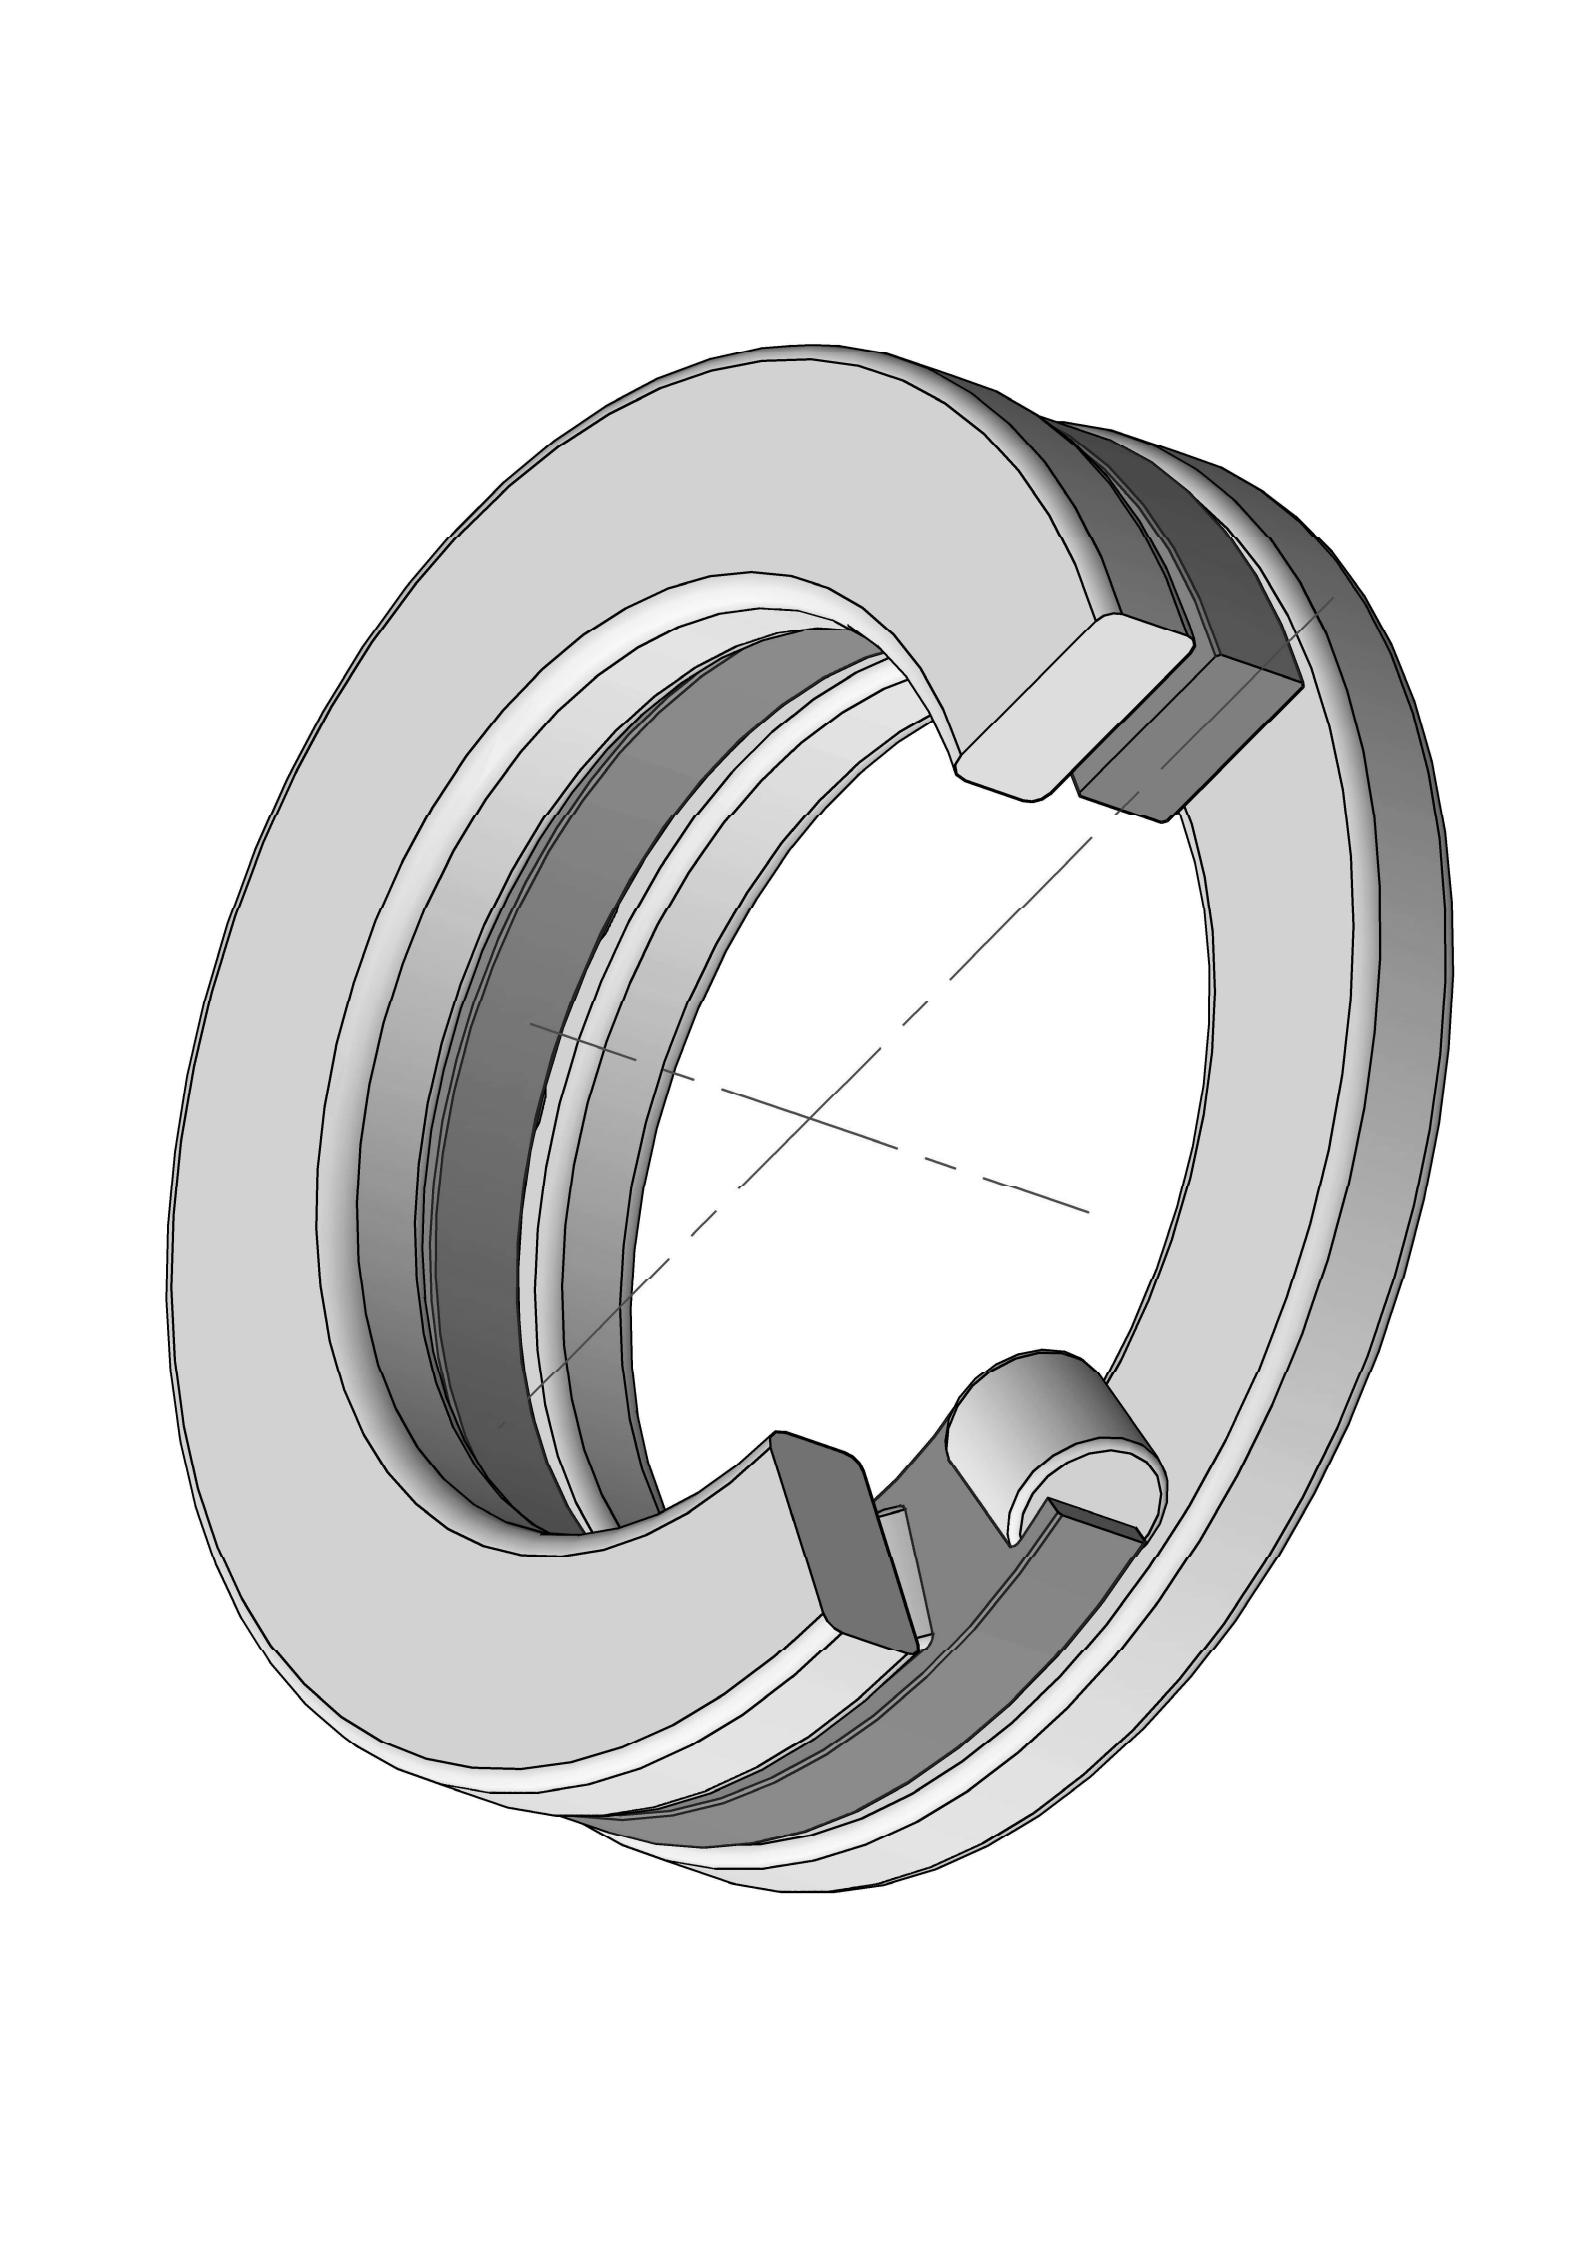 811/600 M Cylindrical roller thrust bearing